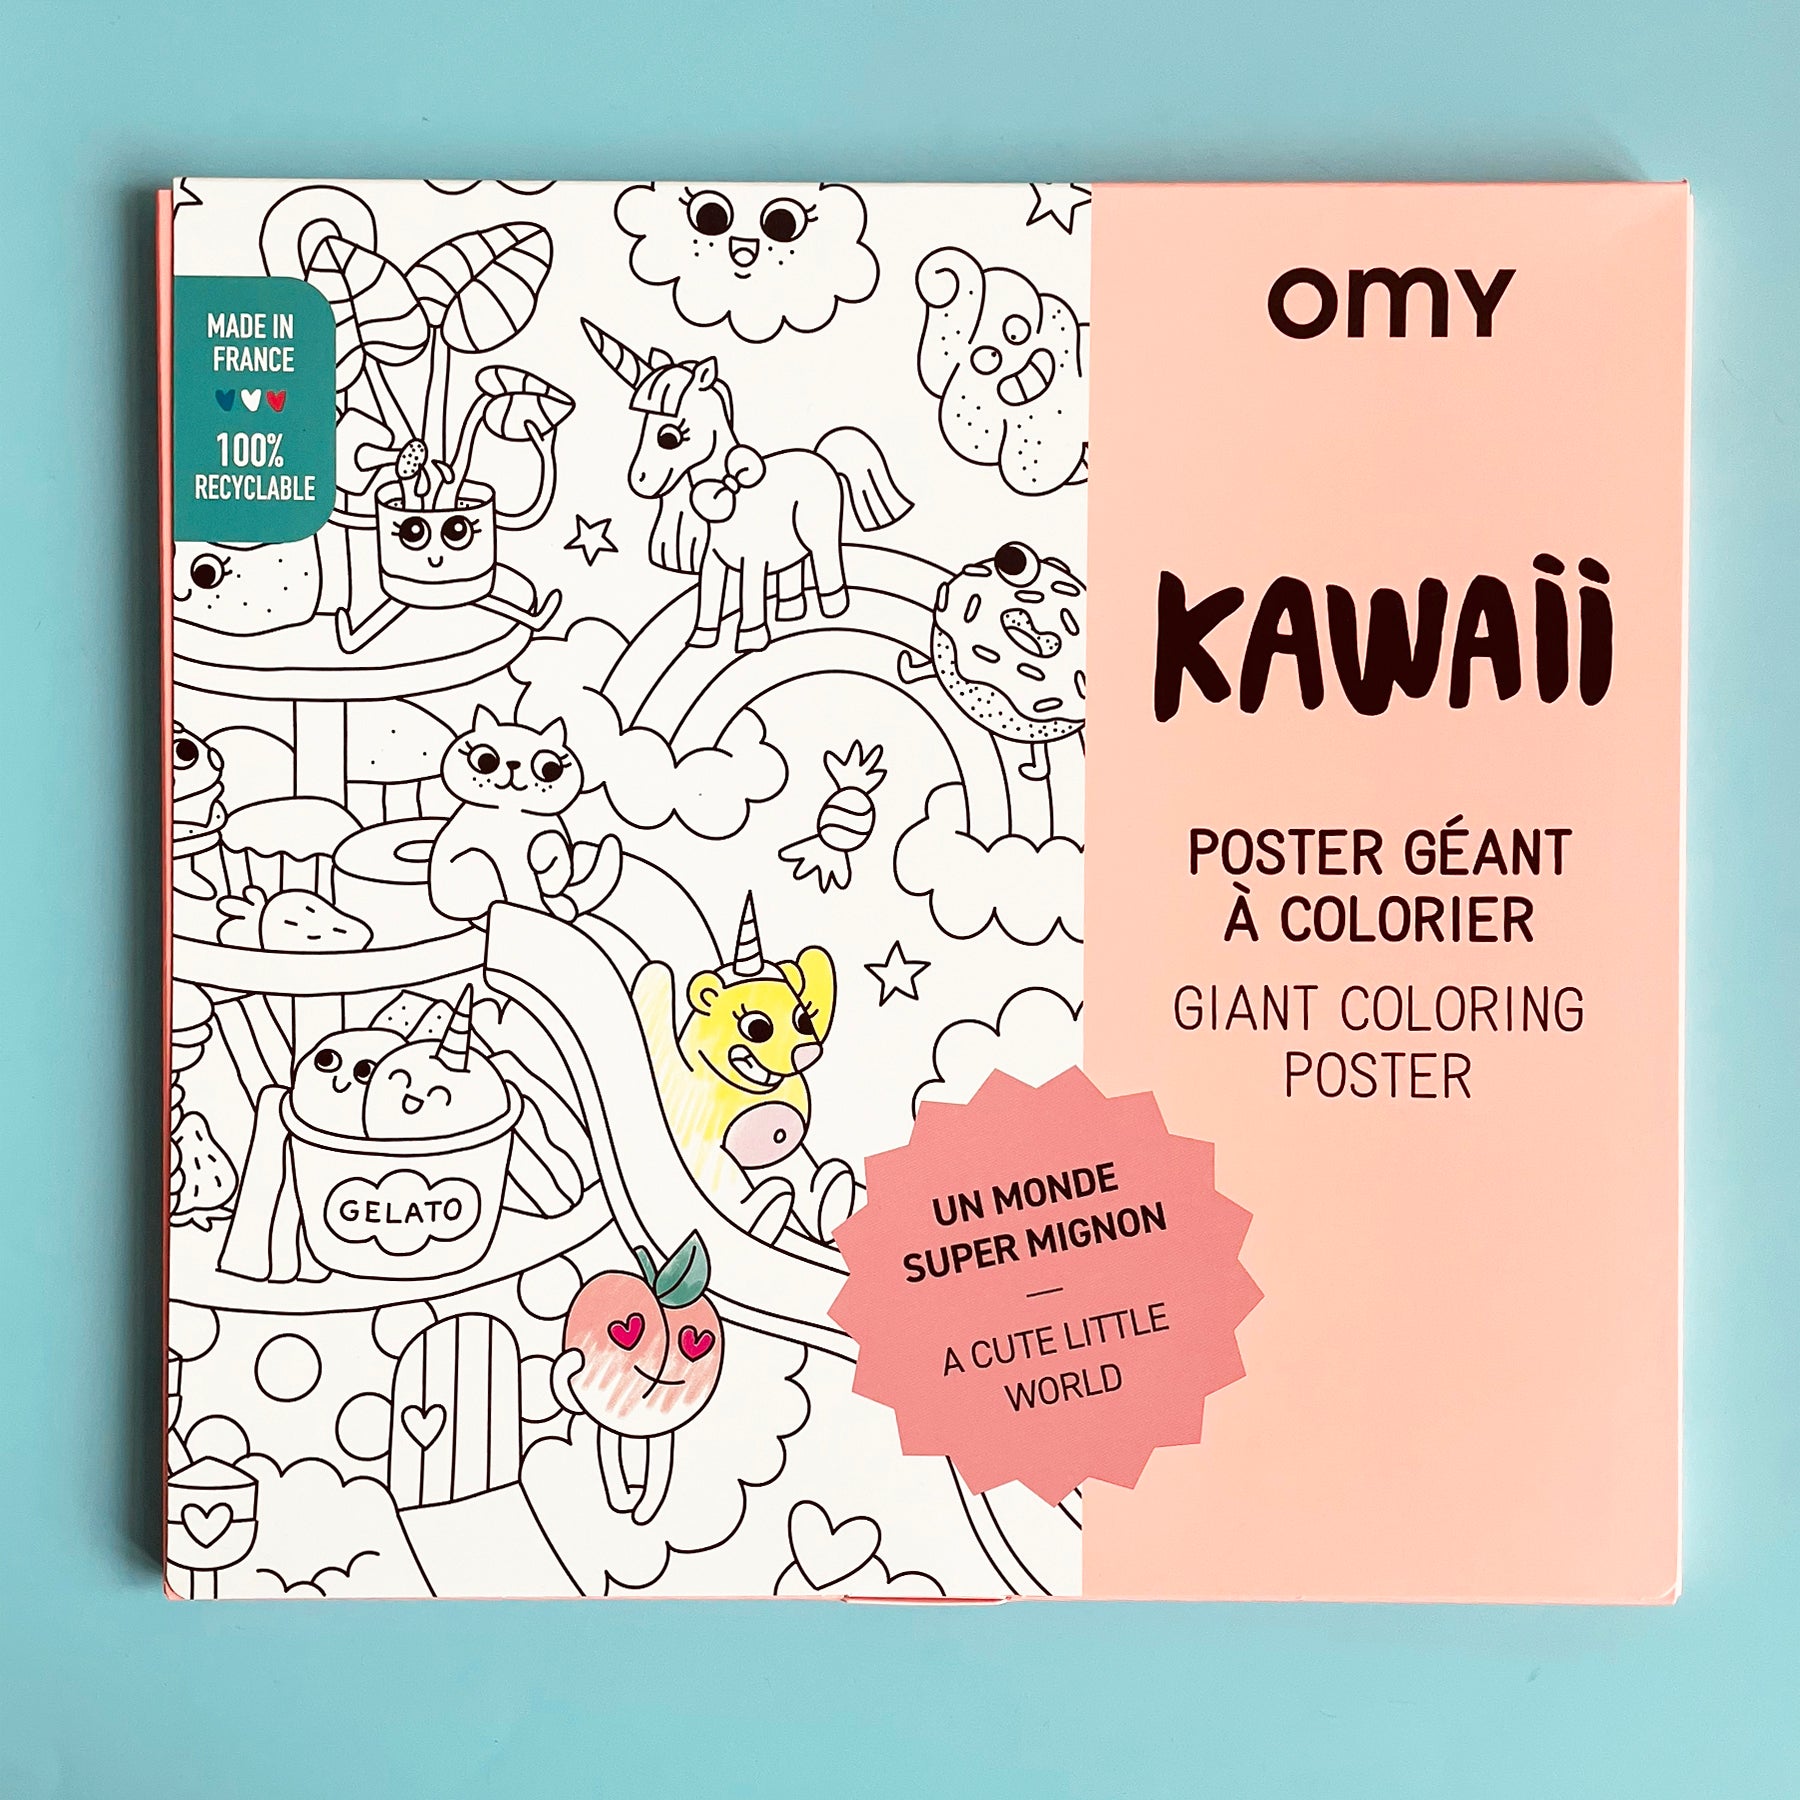 Kawaii - Giant Coloring Poster